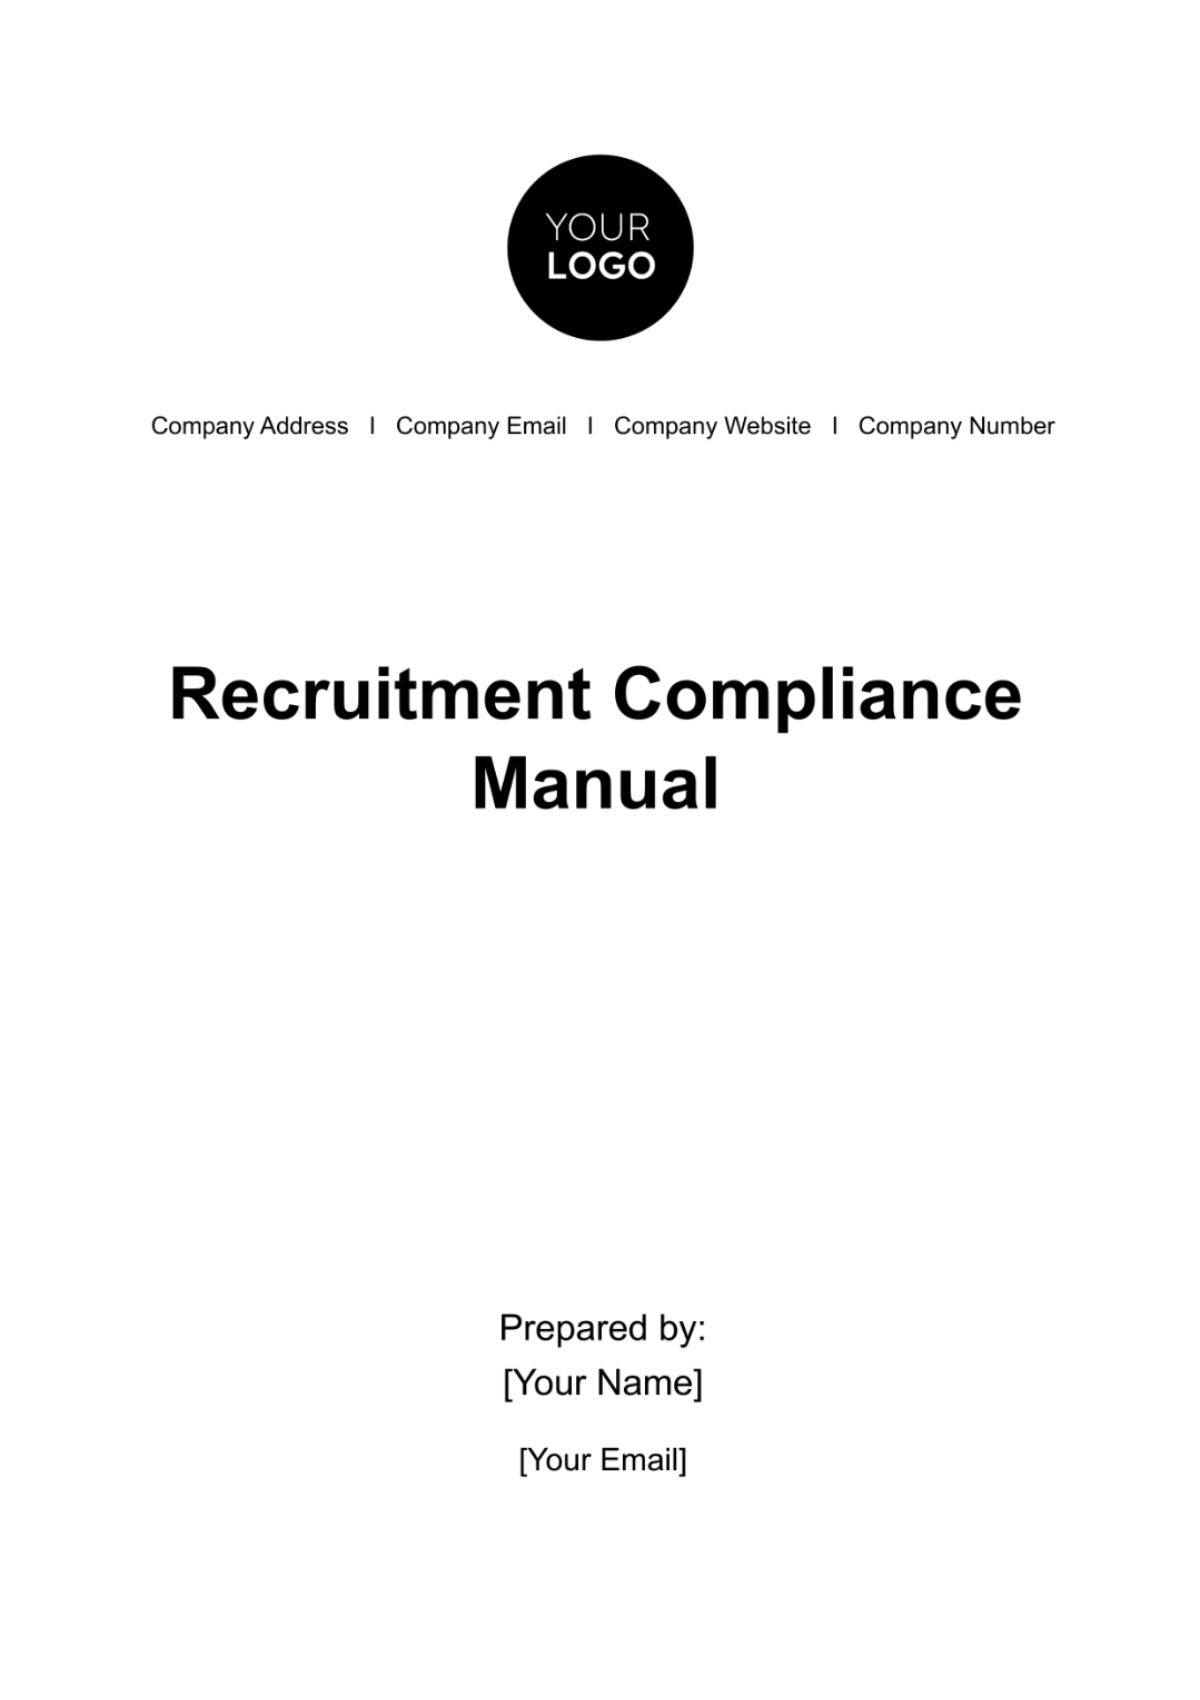 Recruitment Compliance Manual HR Template